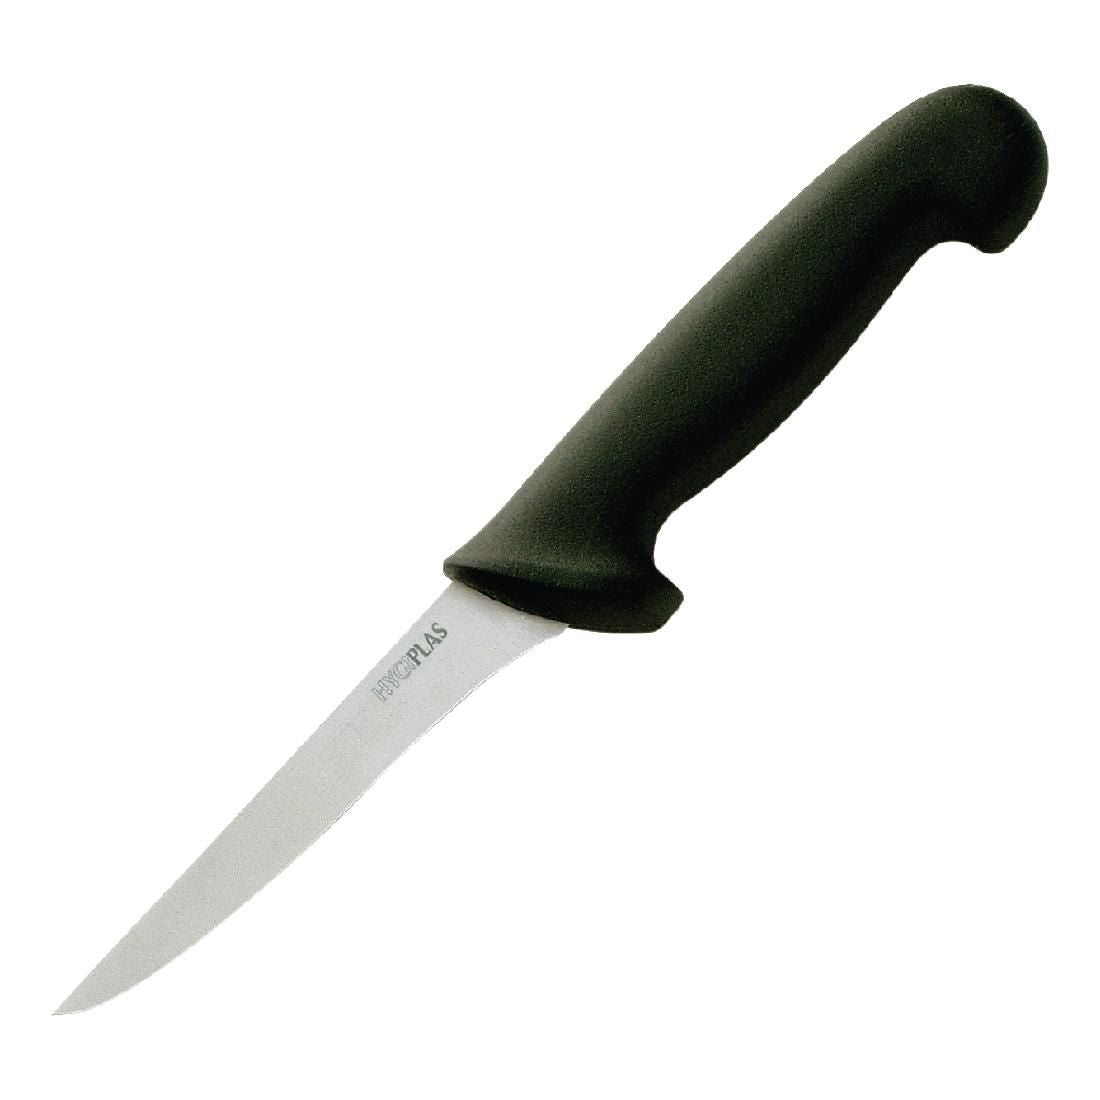 Hygiplas Boning Knife 12.5cm JD Catering Equipment Solutions Ltd